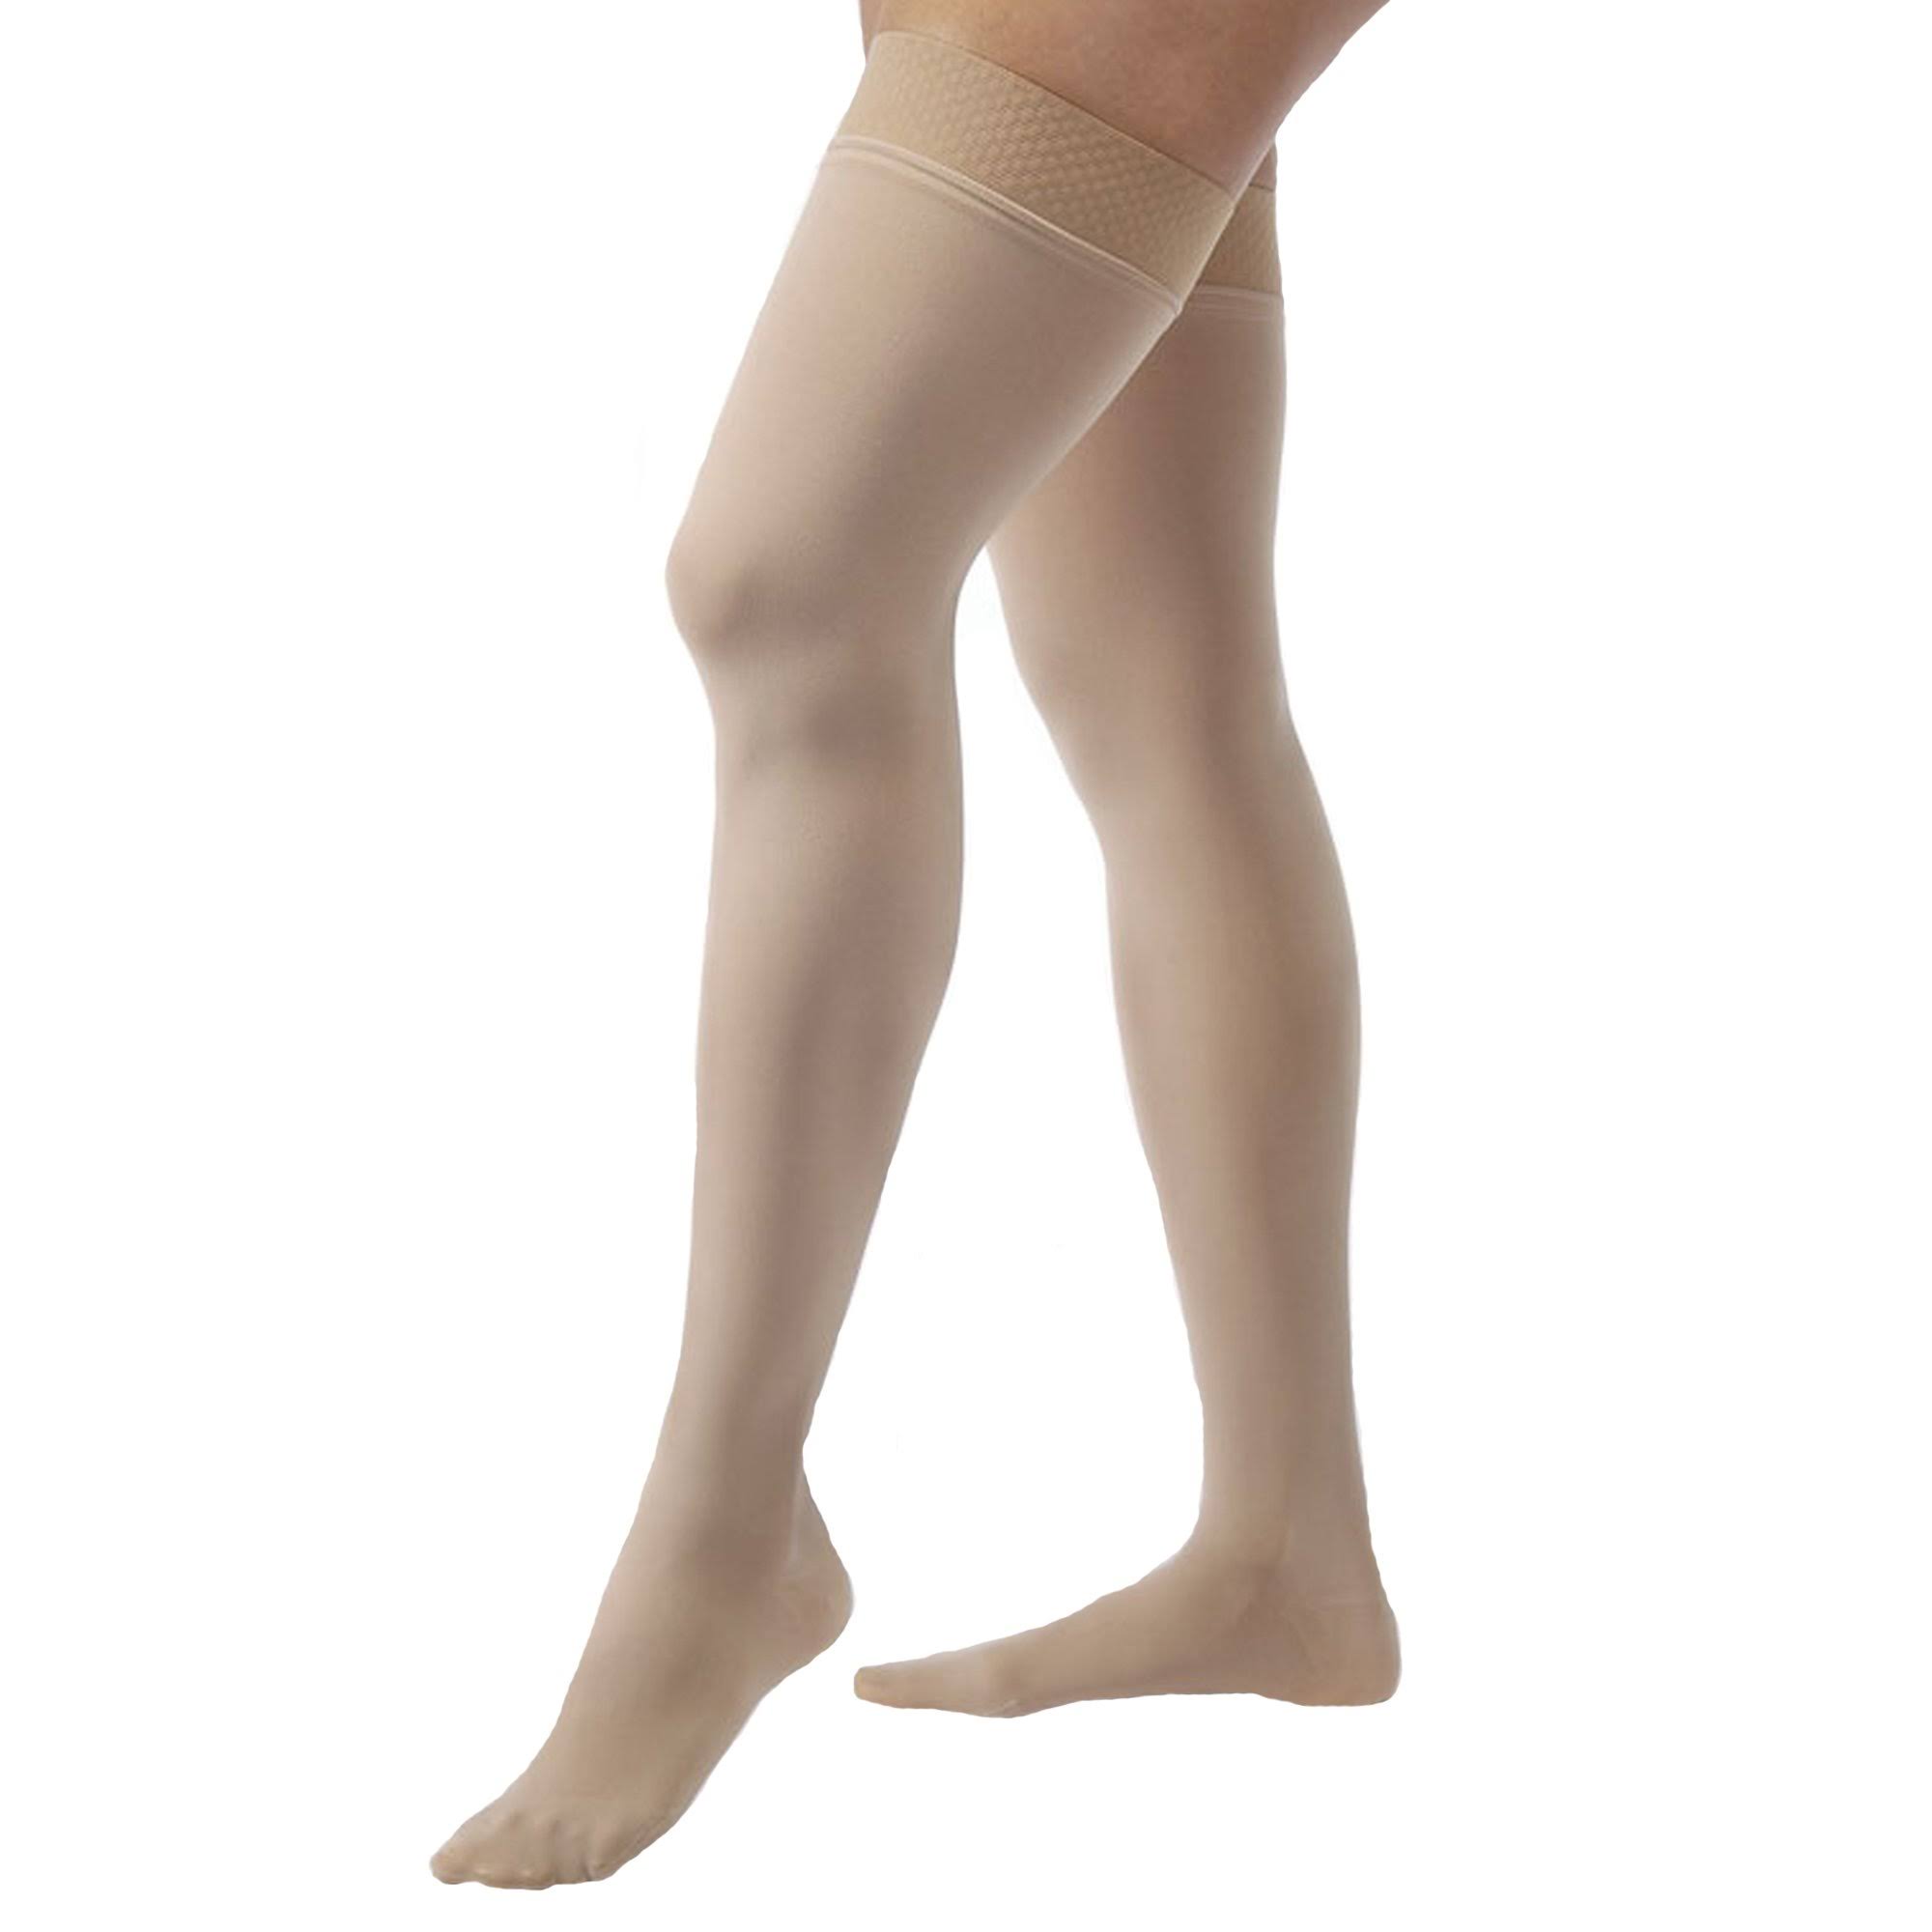 Jobst 115544 opaque thigh high ot stockings-20-30 mmhg-natural-small